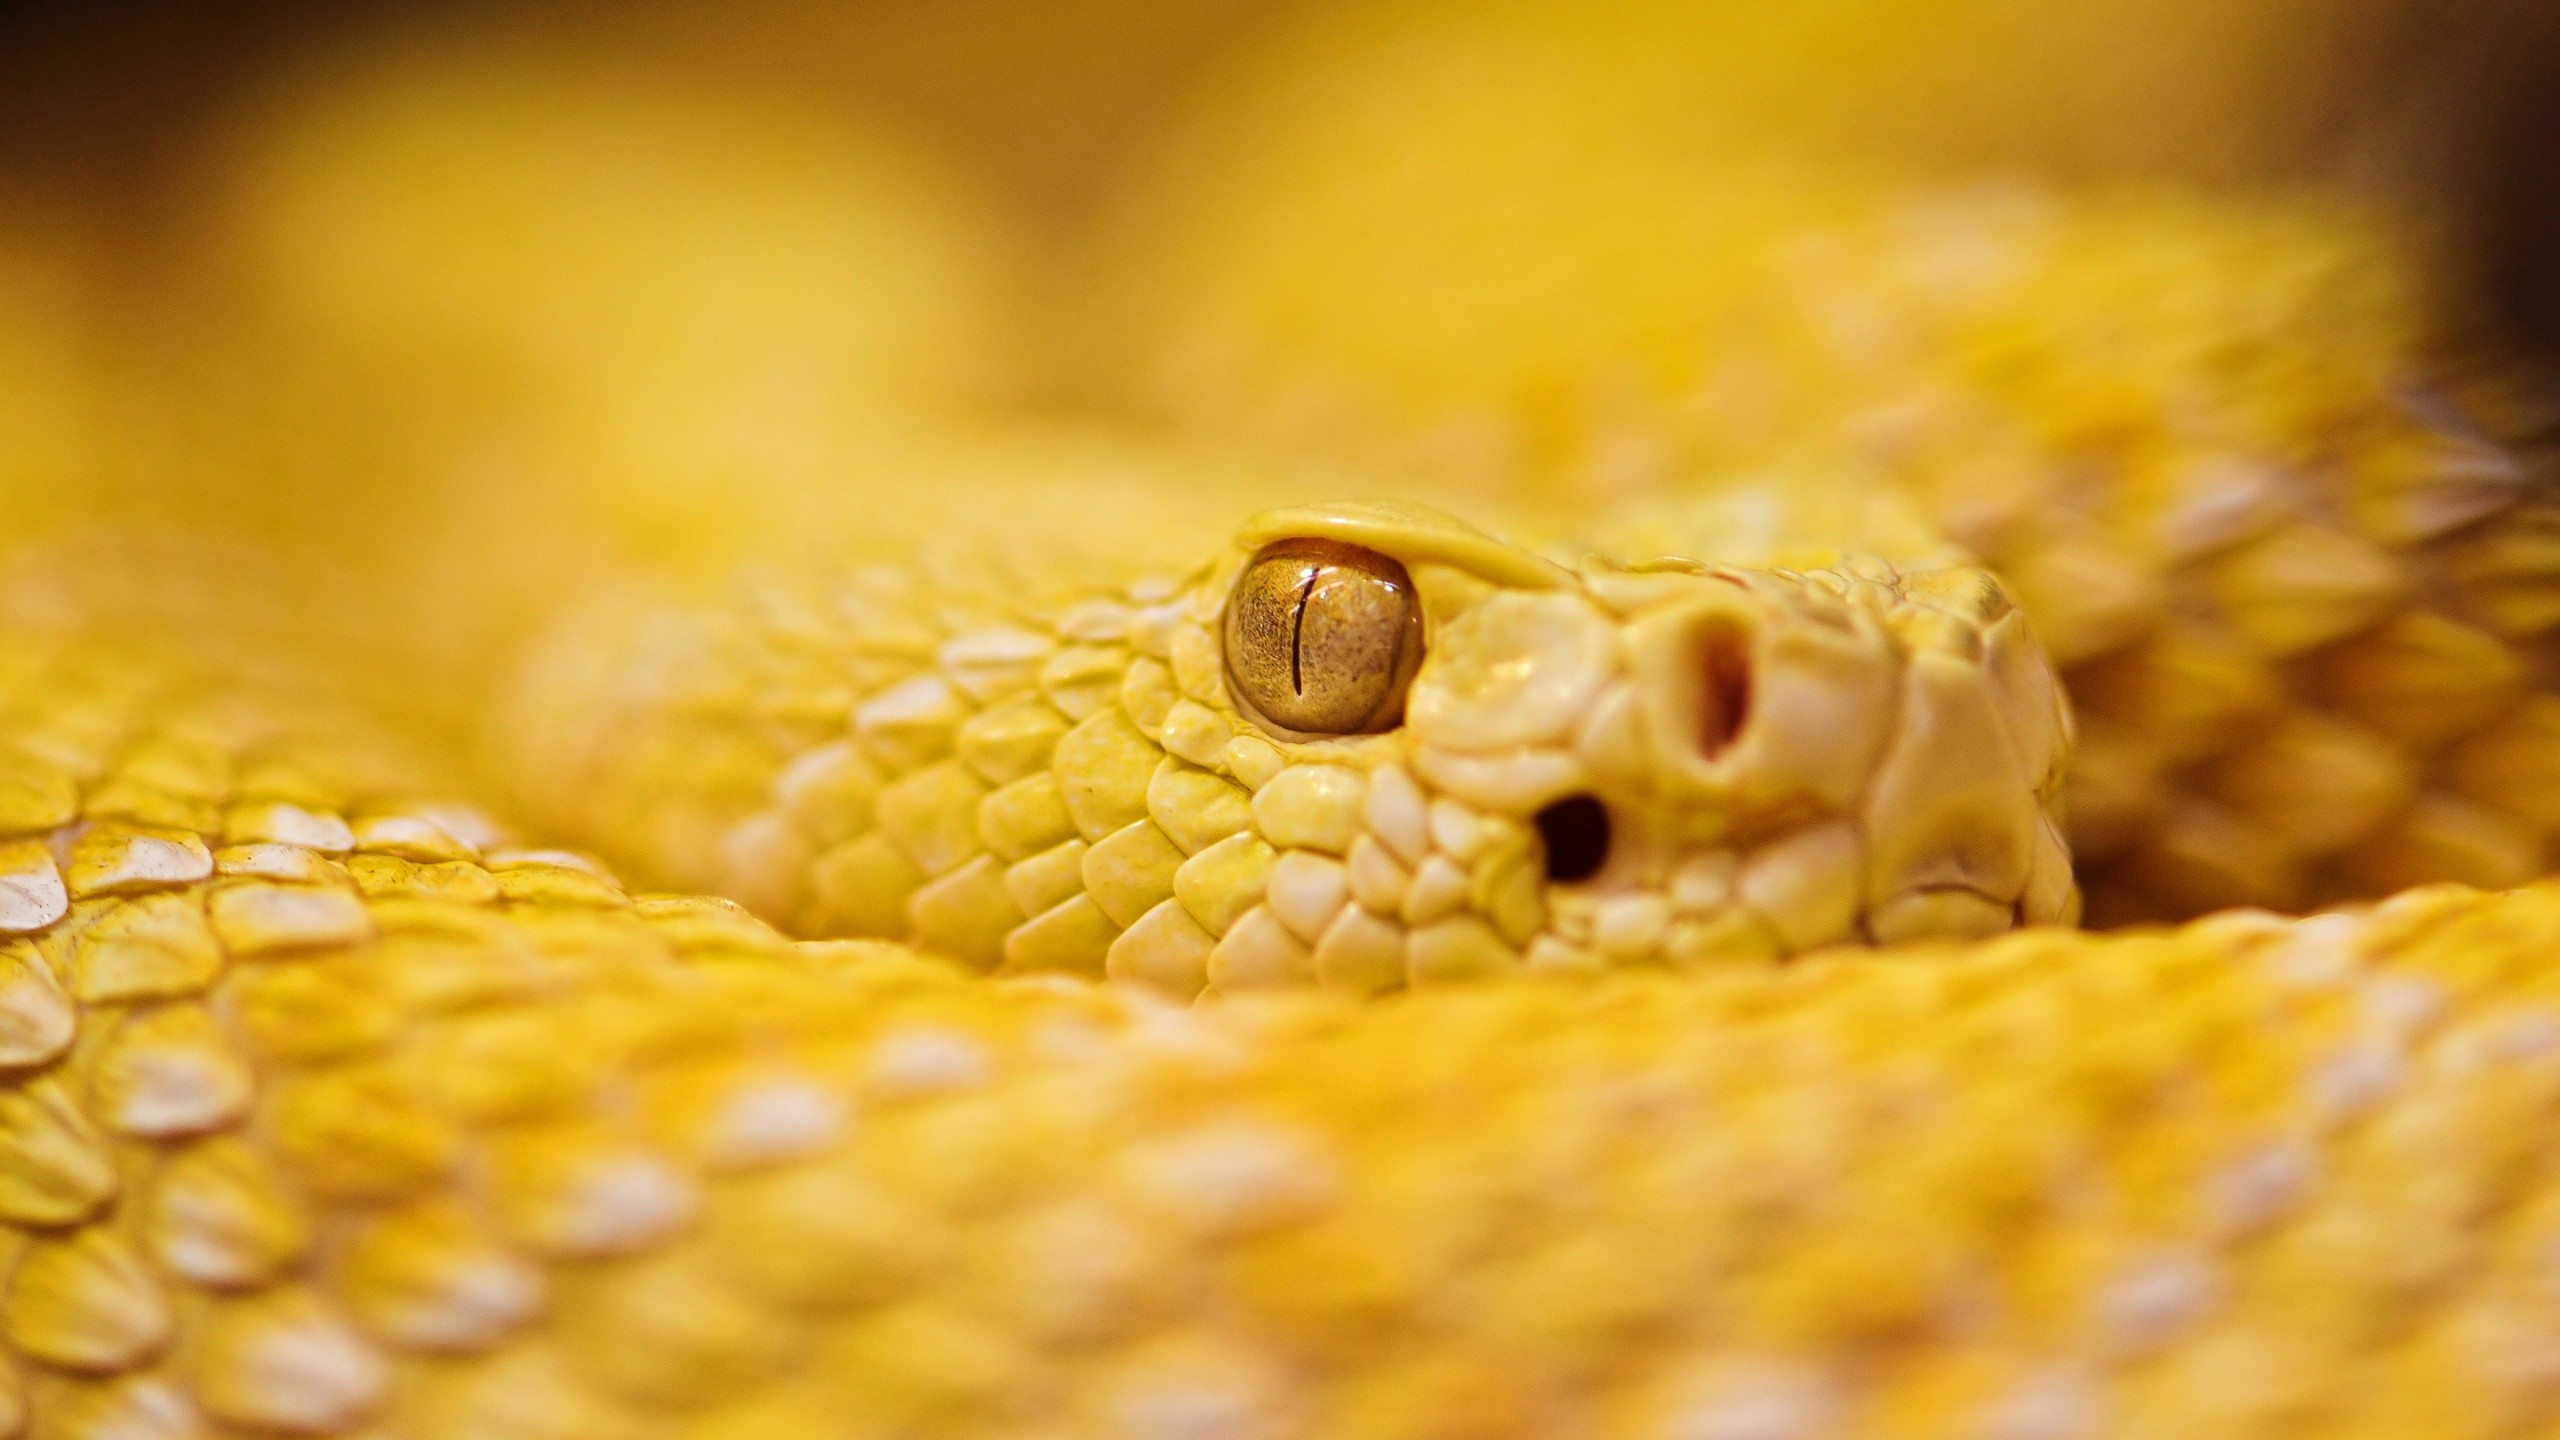 snake wallpaper,reptile,rattlesnake,scaled reptile,viper,snout